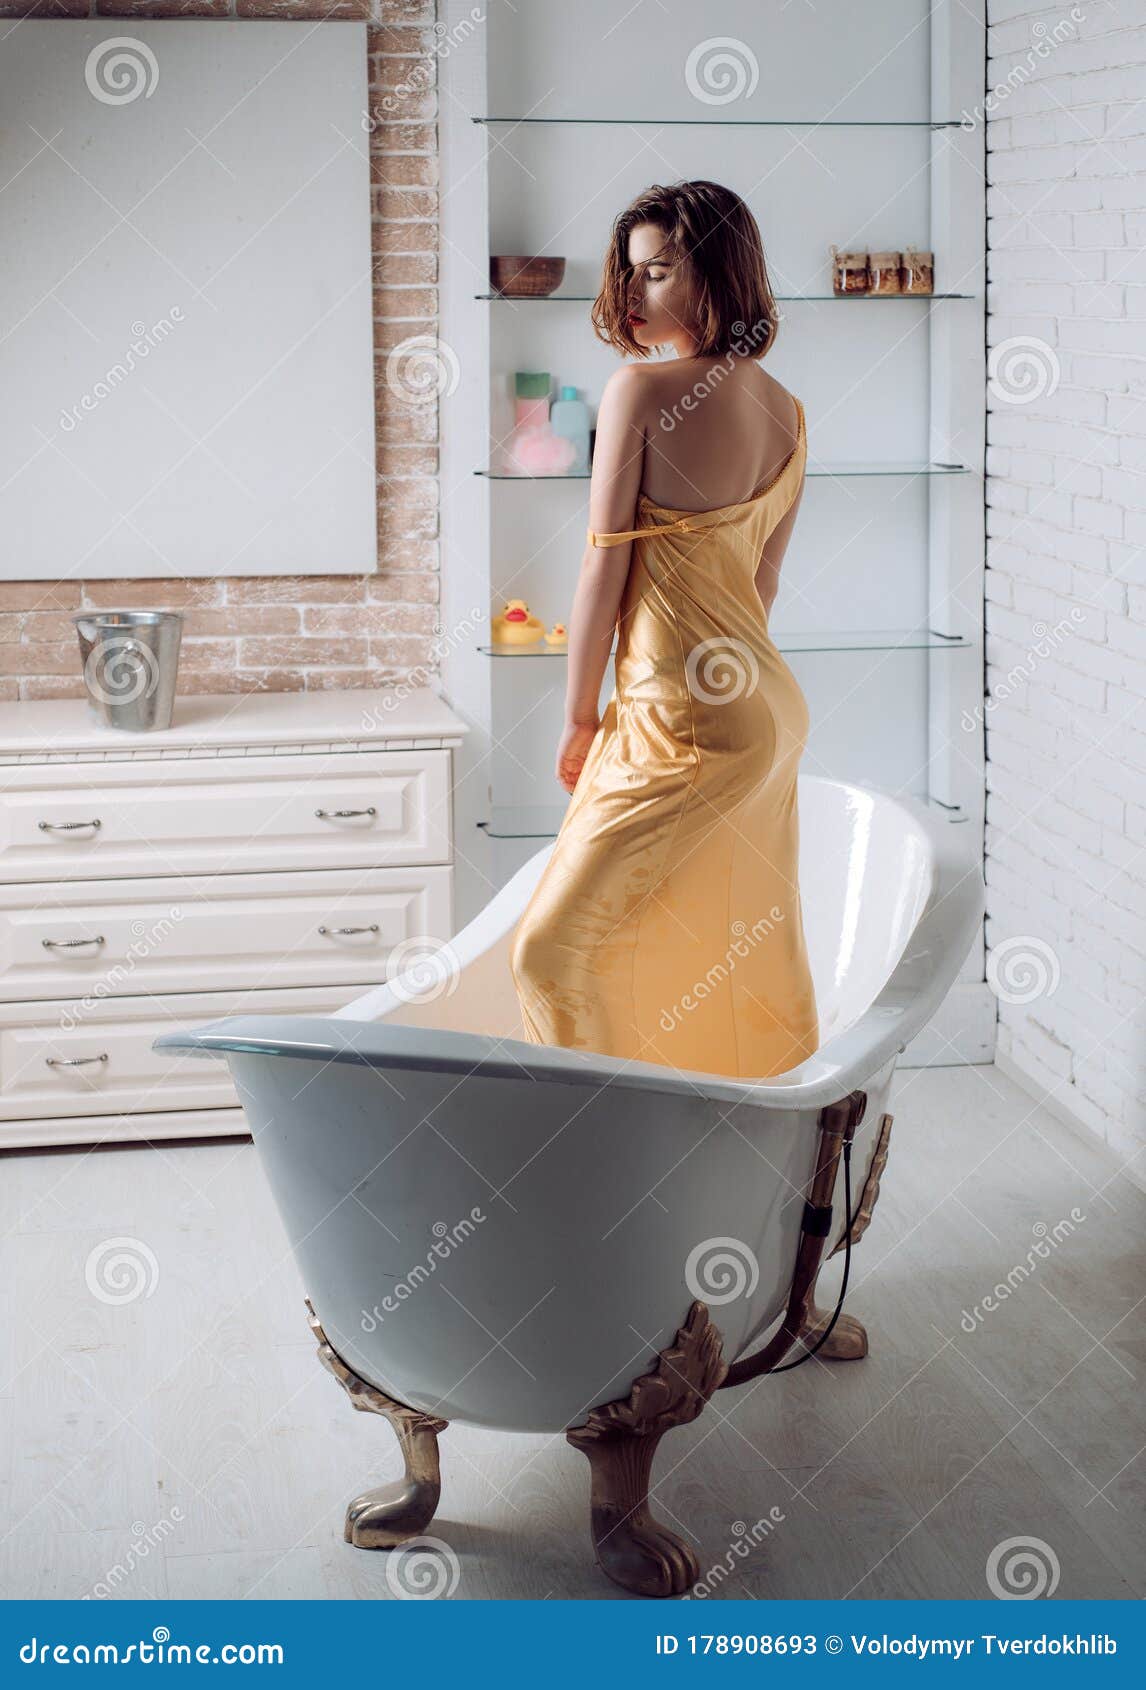 Pretty Woman Wearing Bathrobe In Bathroom Beautiful Woman Relaxing In Bathtub Stock Image